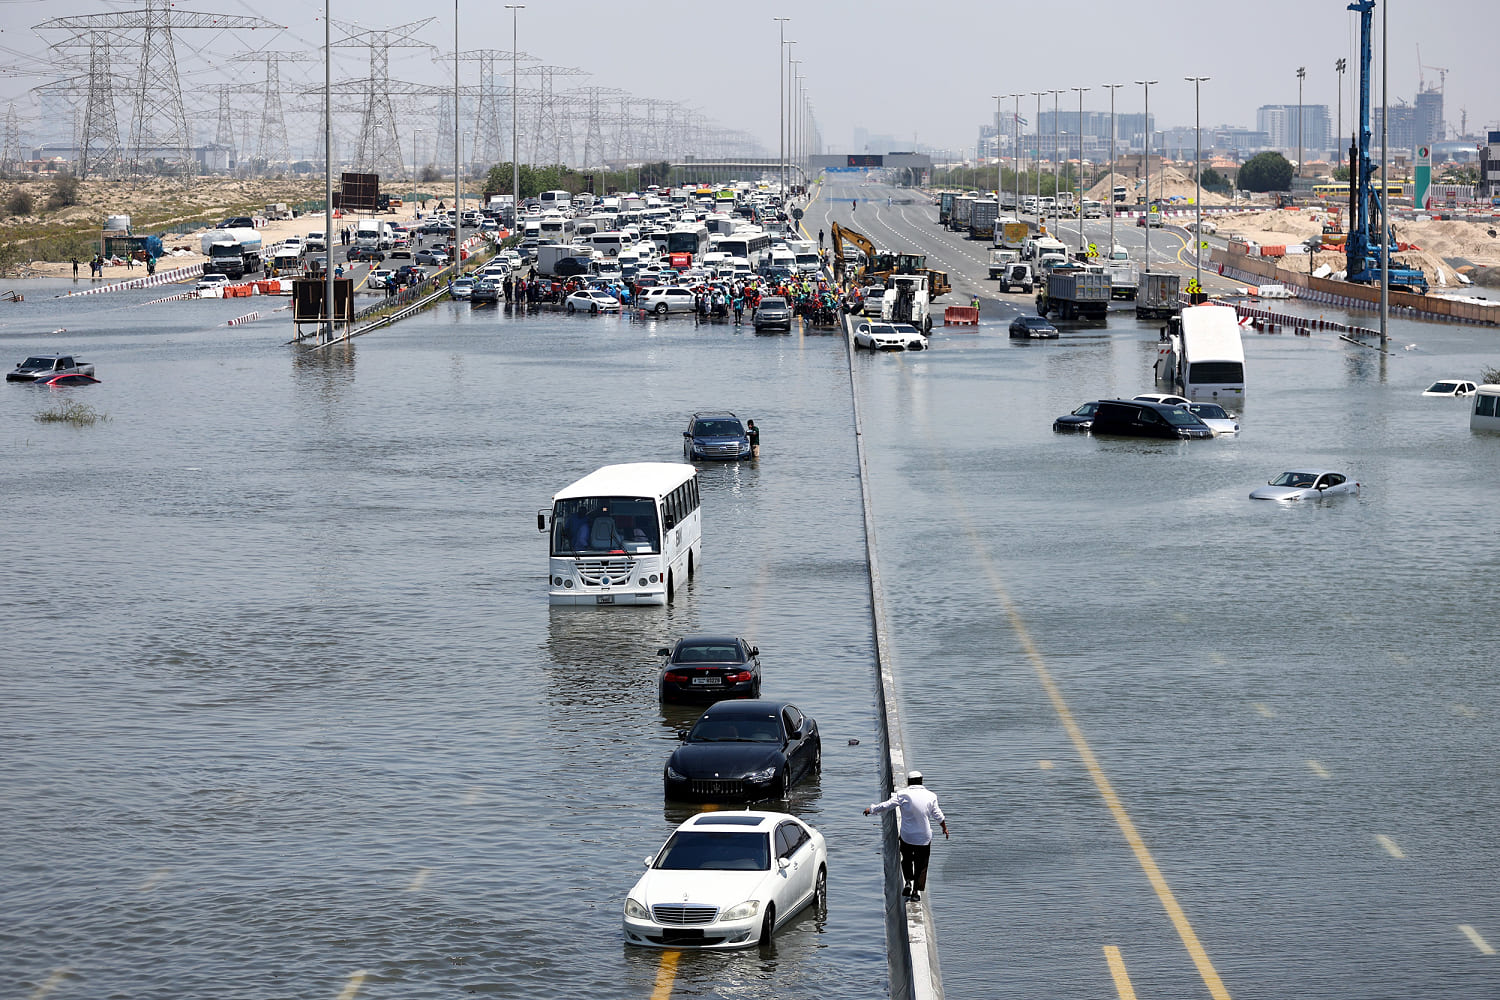 Dubai clears up after epic rains swamp glitzy desert city